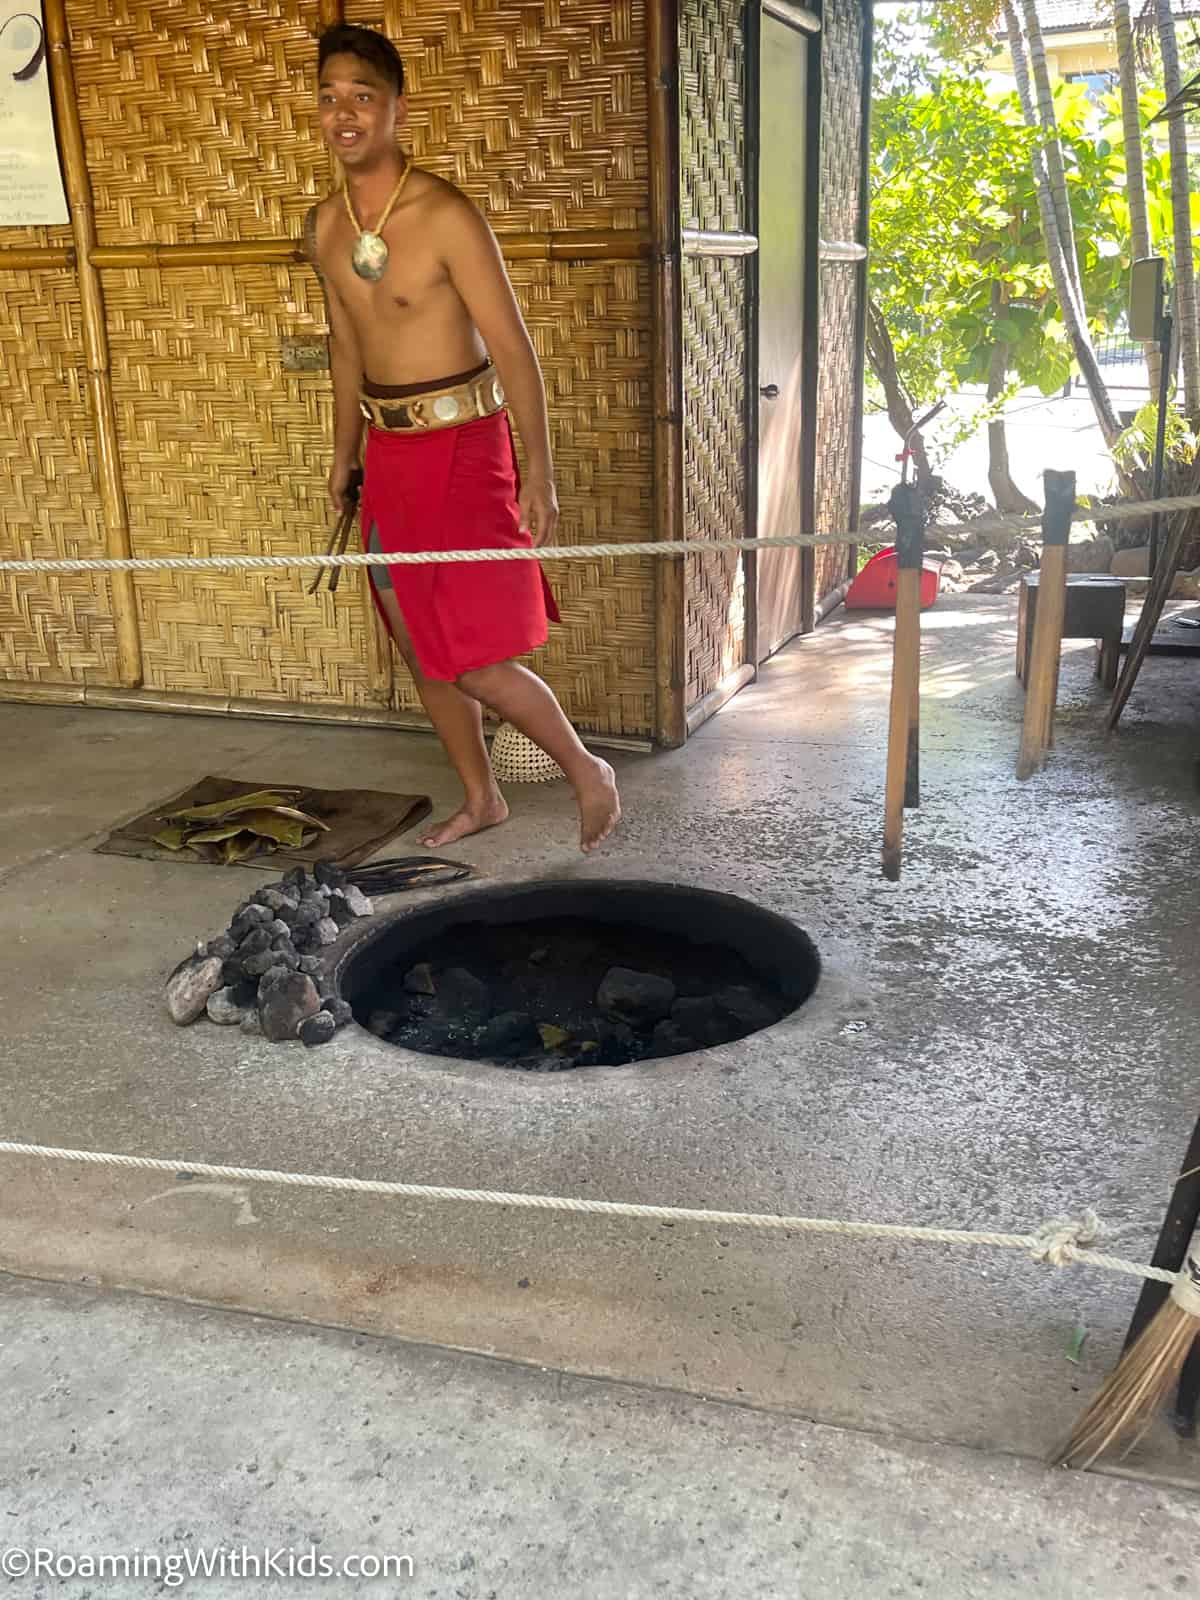 baking coconut bread in tahiti village